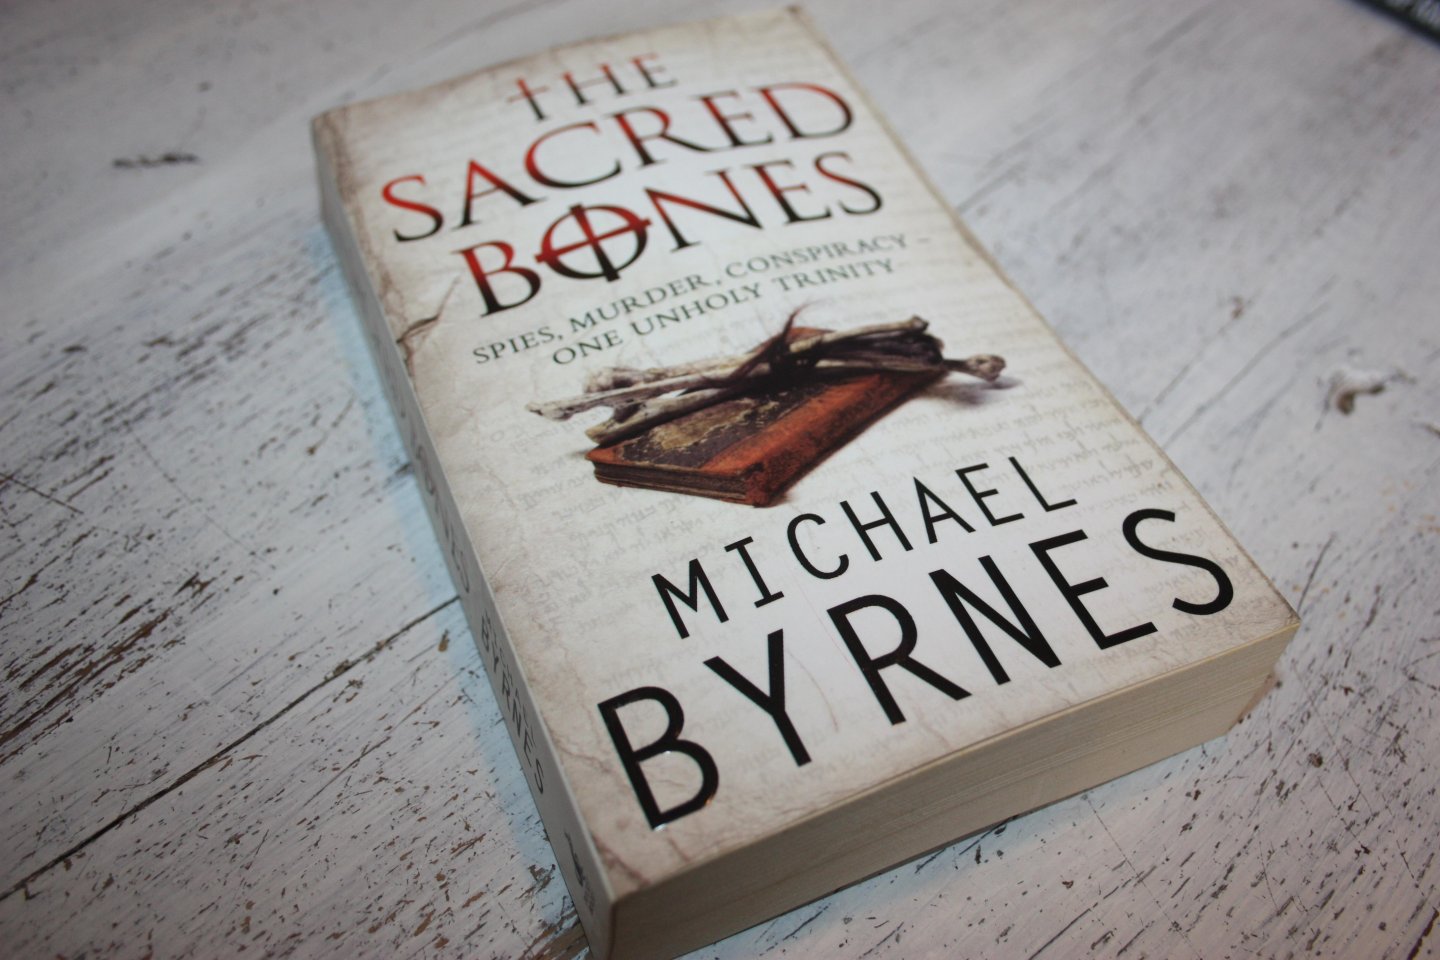 Byrnes, Michael - SACRED BONES